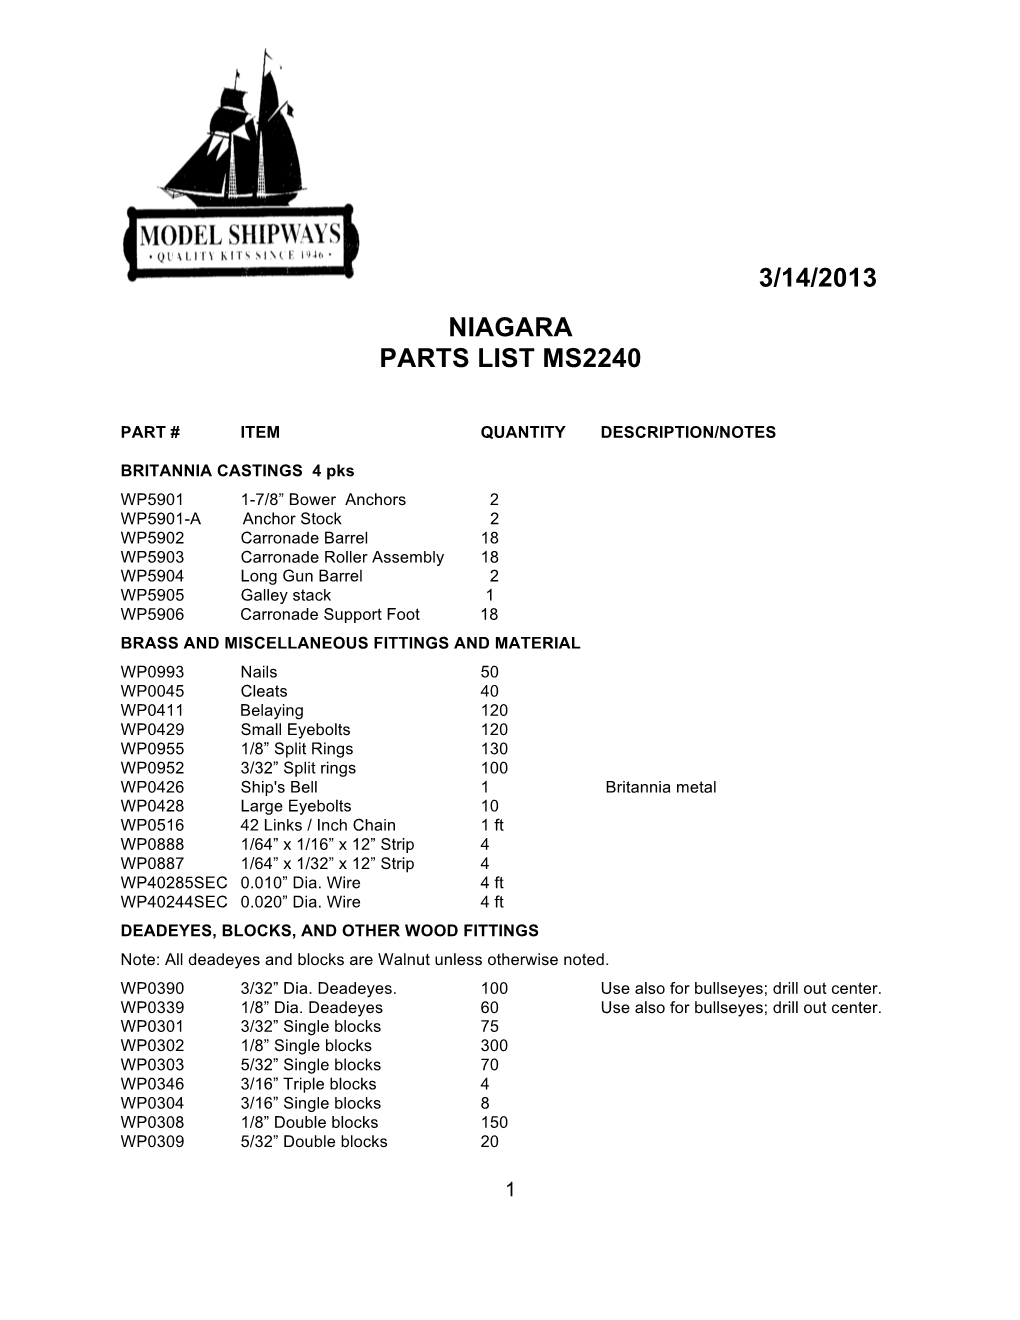 3/14/2013 Niagara Parts List Ms2240